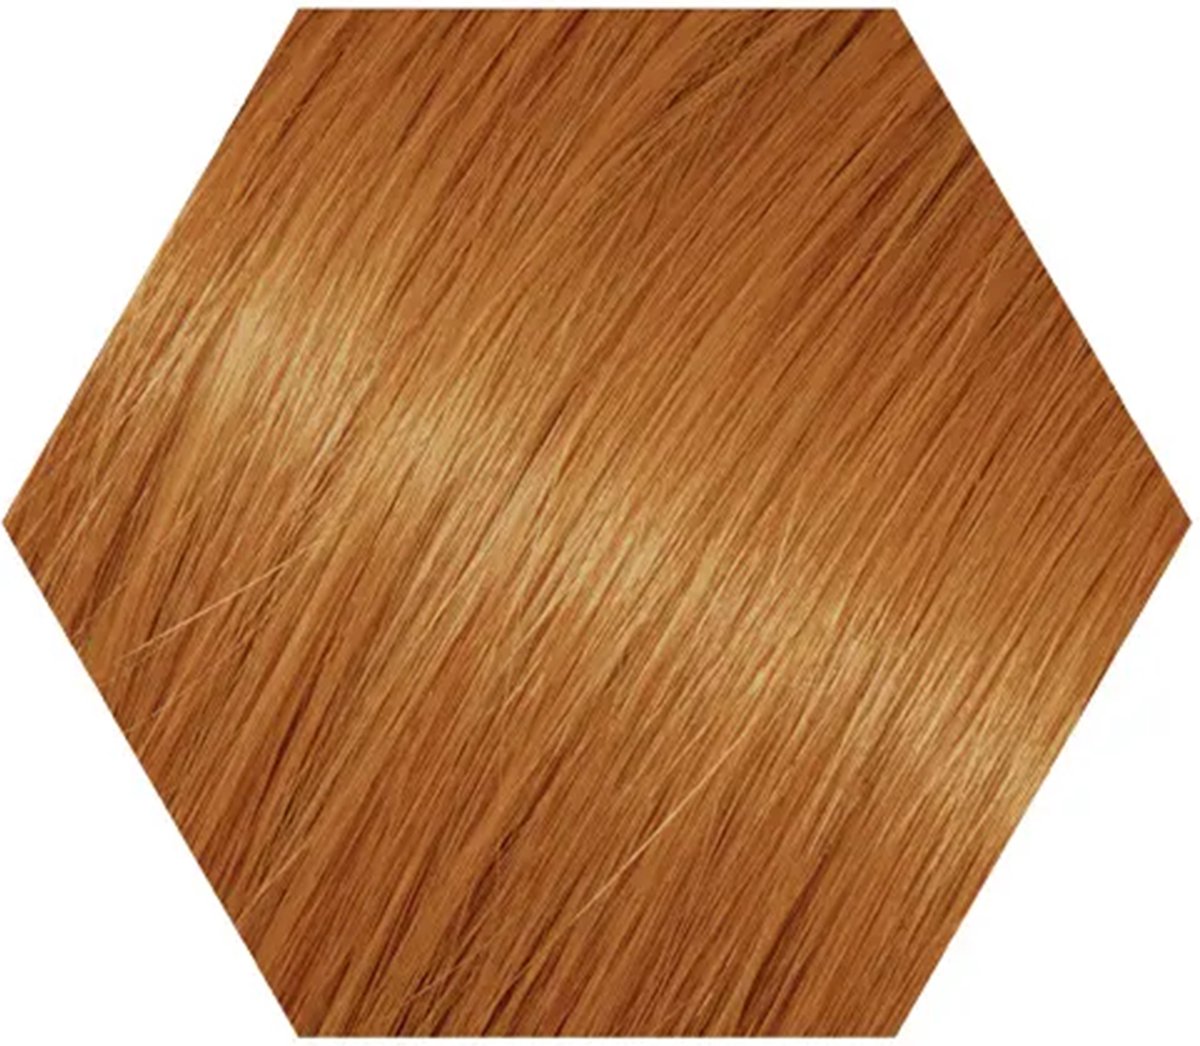 Wecolour Haarverf - Goud lichtblond 9.3 - Kapperskwaliteit Haarkleuring